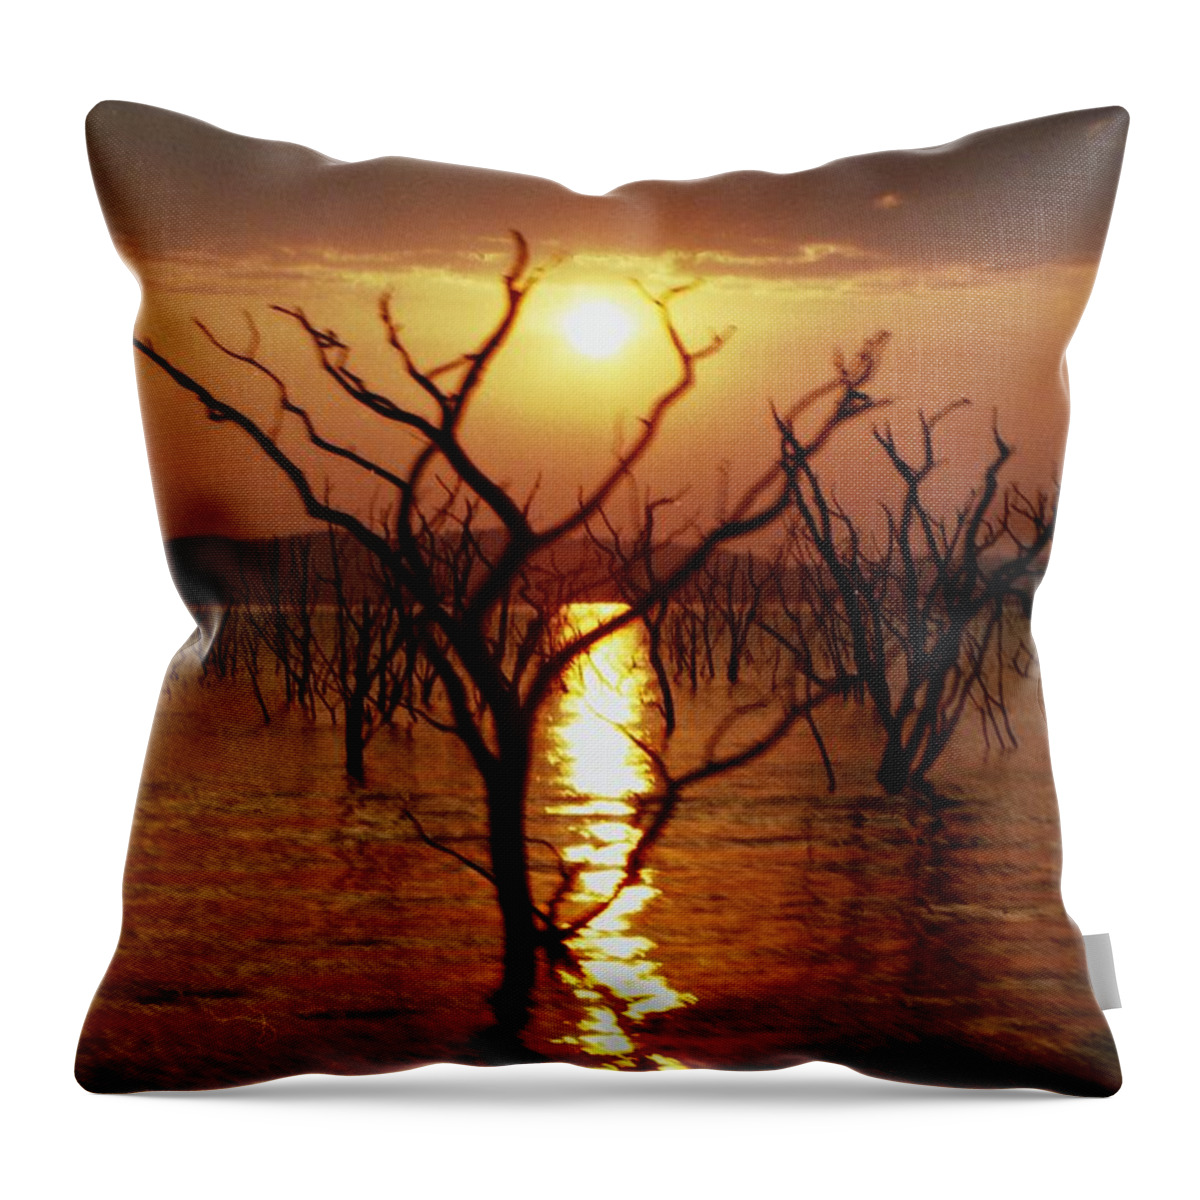 Sunset Throw Pillow featuring the photograph Kariba Sunset by Jeremy Hayden